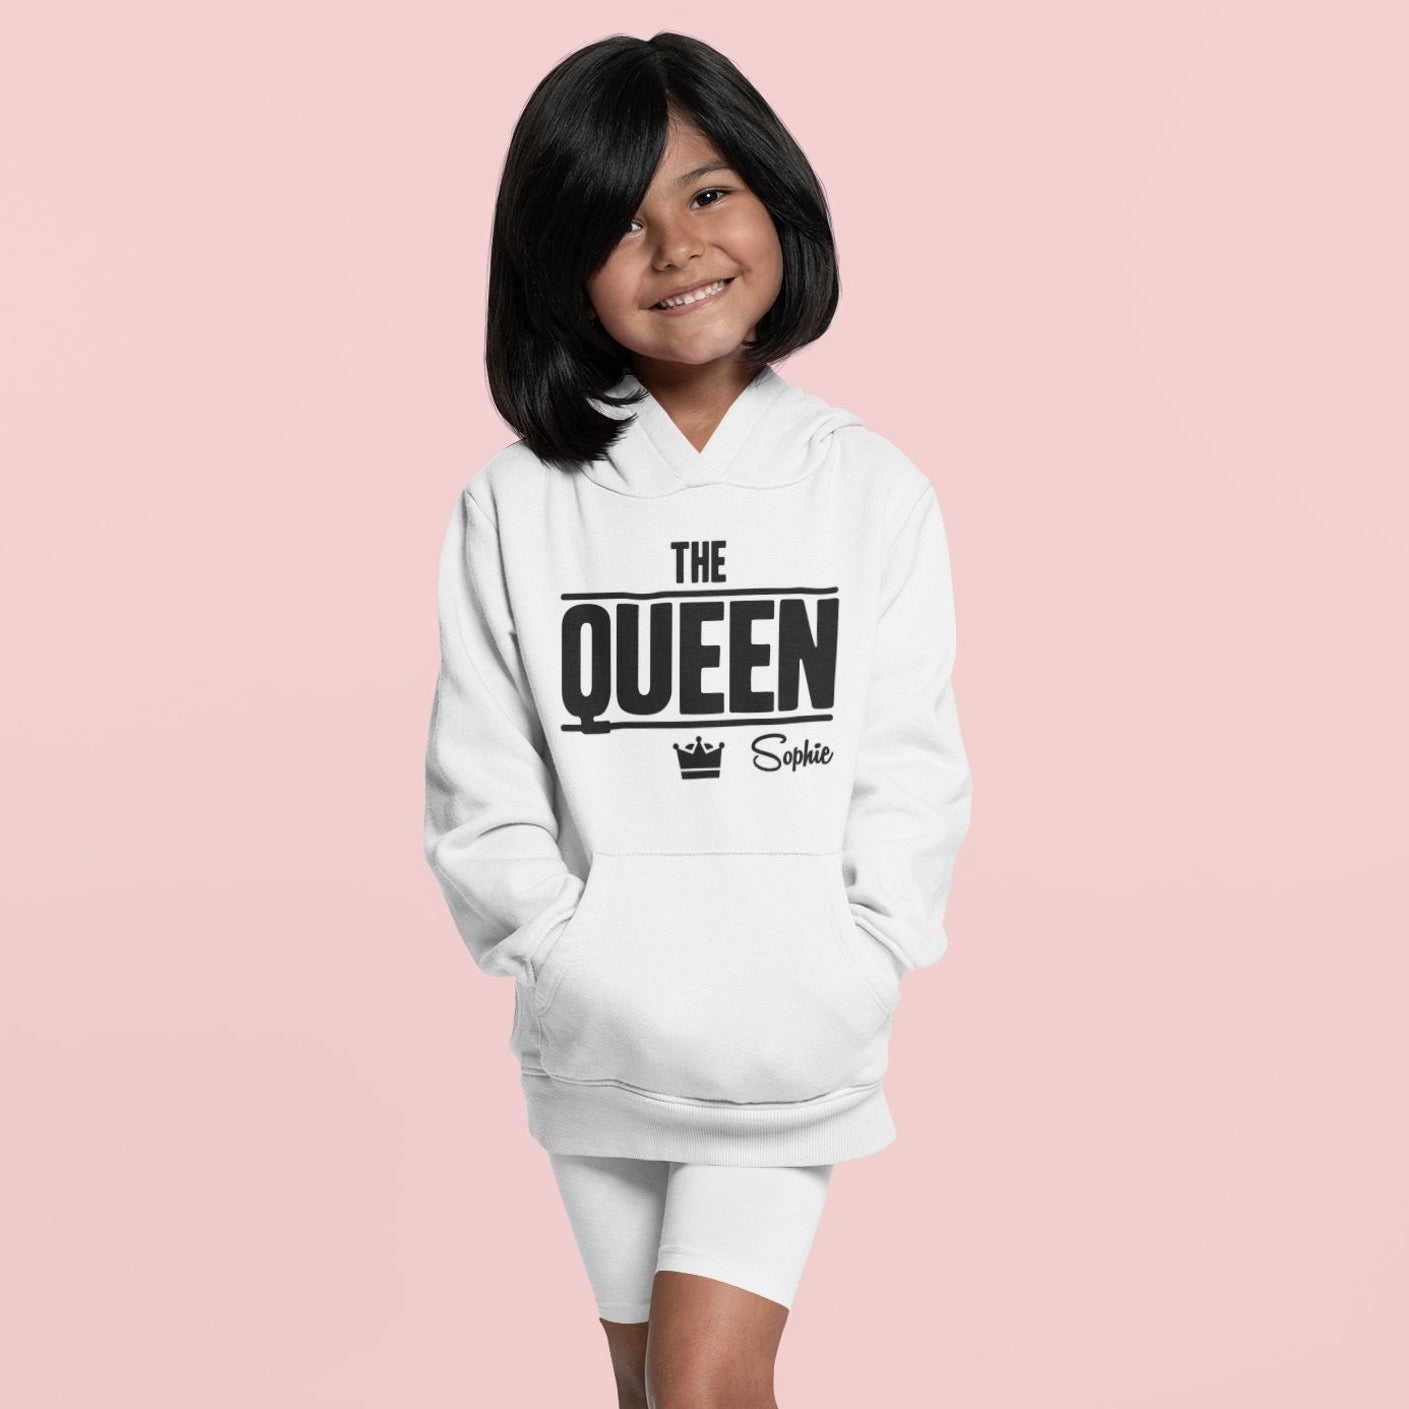 queen kinder hoodie mit namen bedrucken lassen weisses mädchen pullover mit kapuze